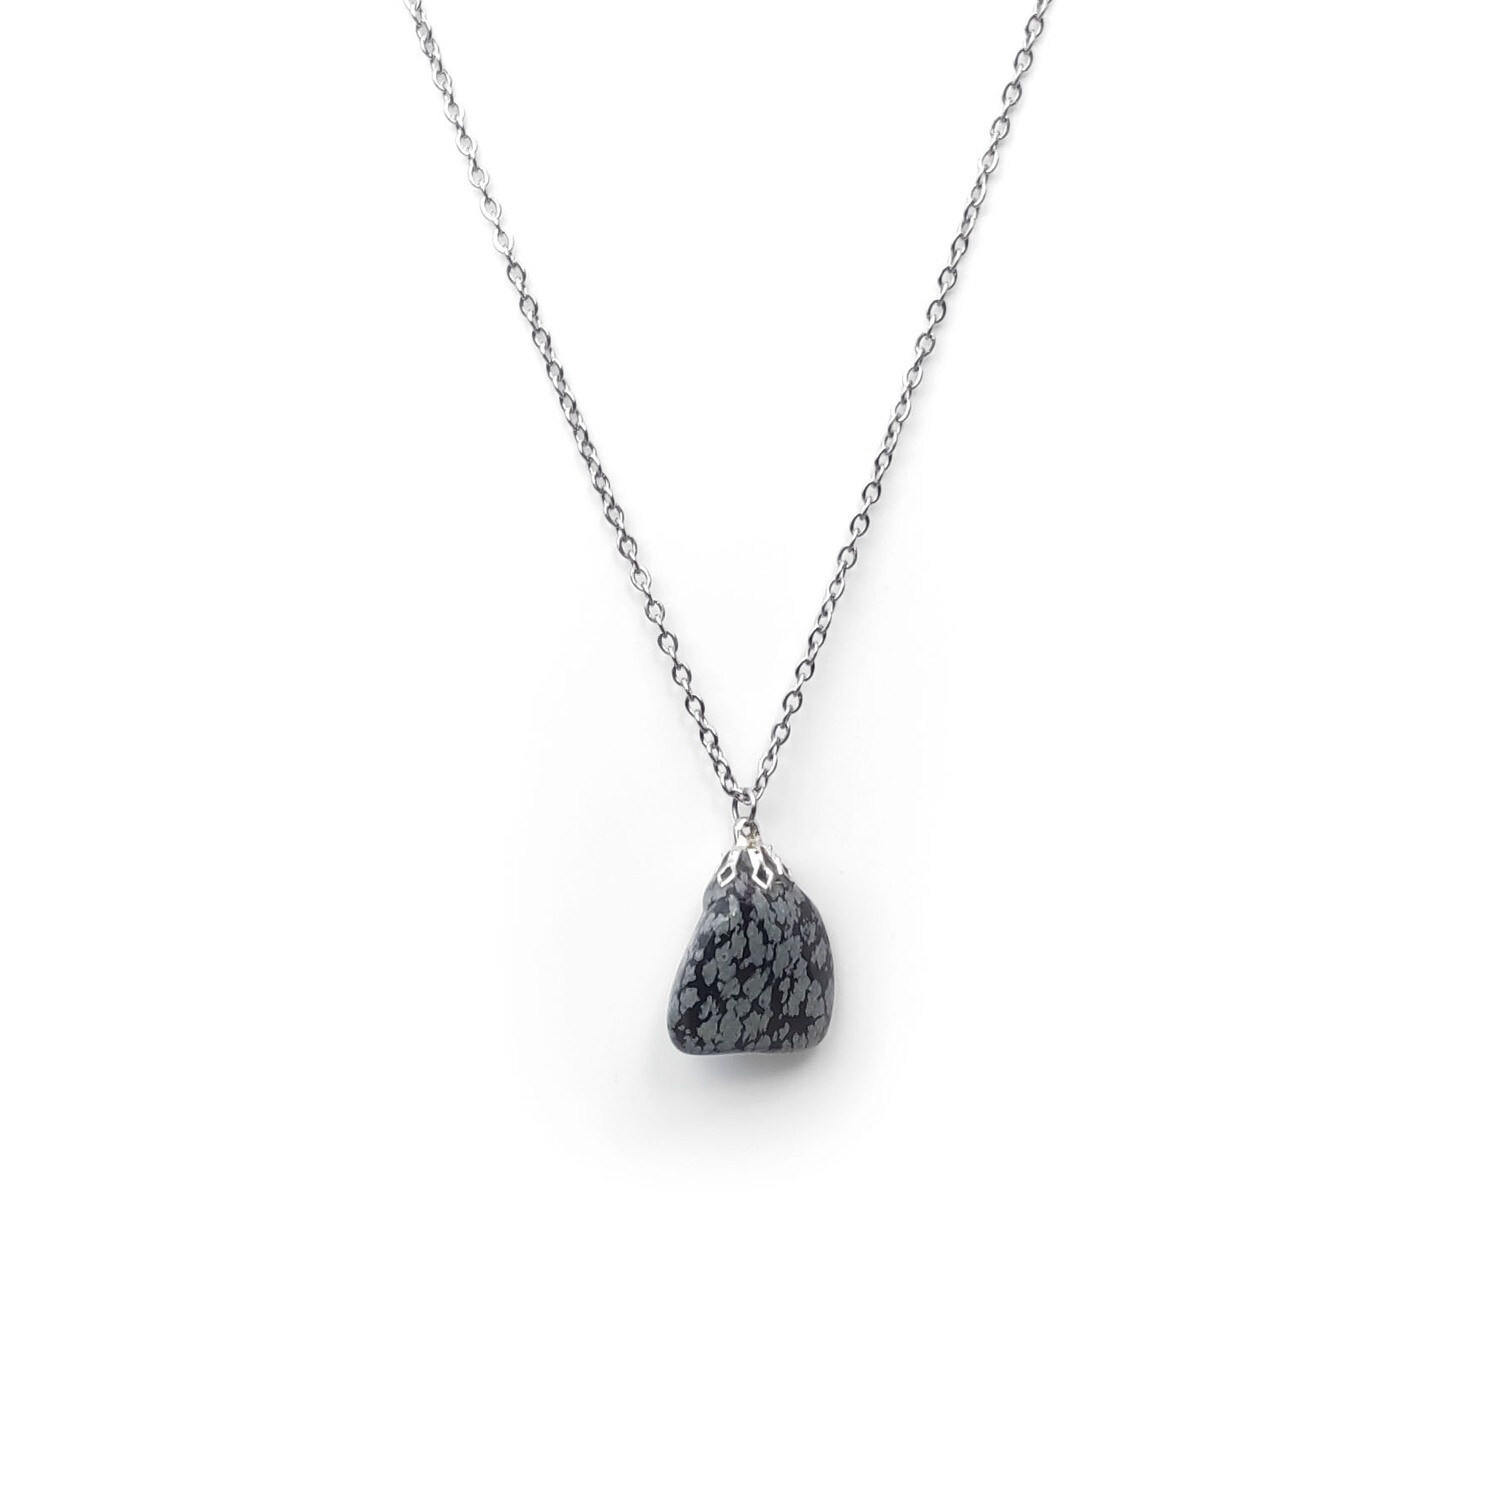 Snowflake Obsidian pendant gemstone necklace